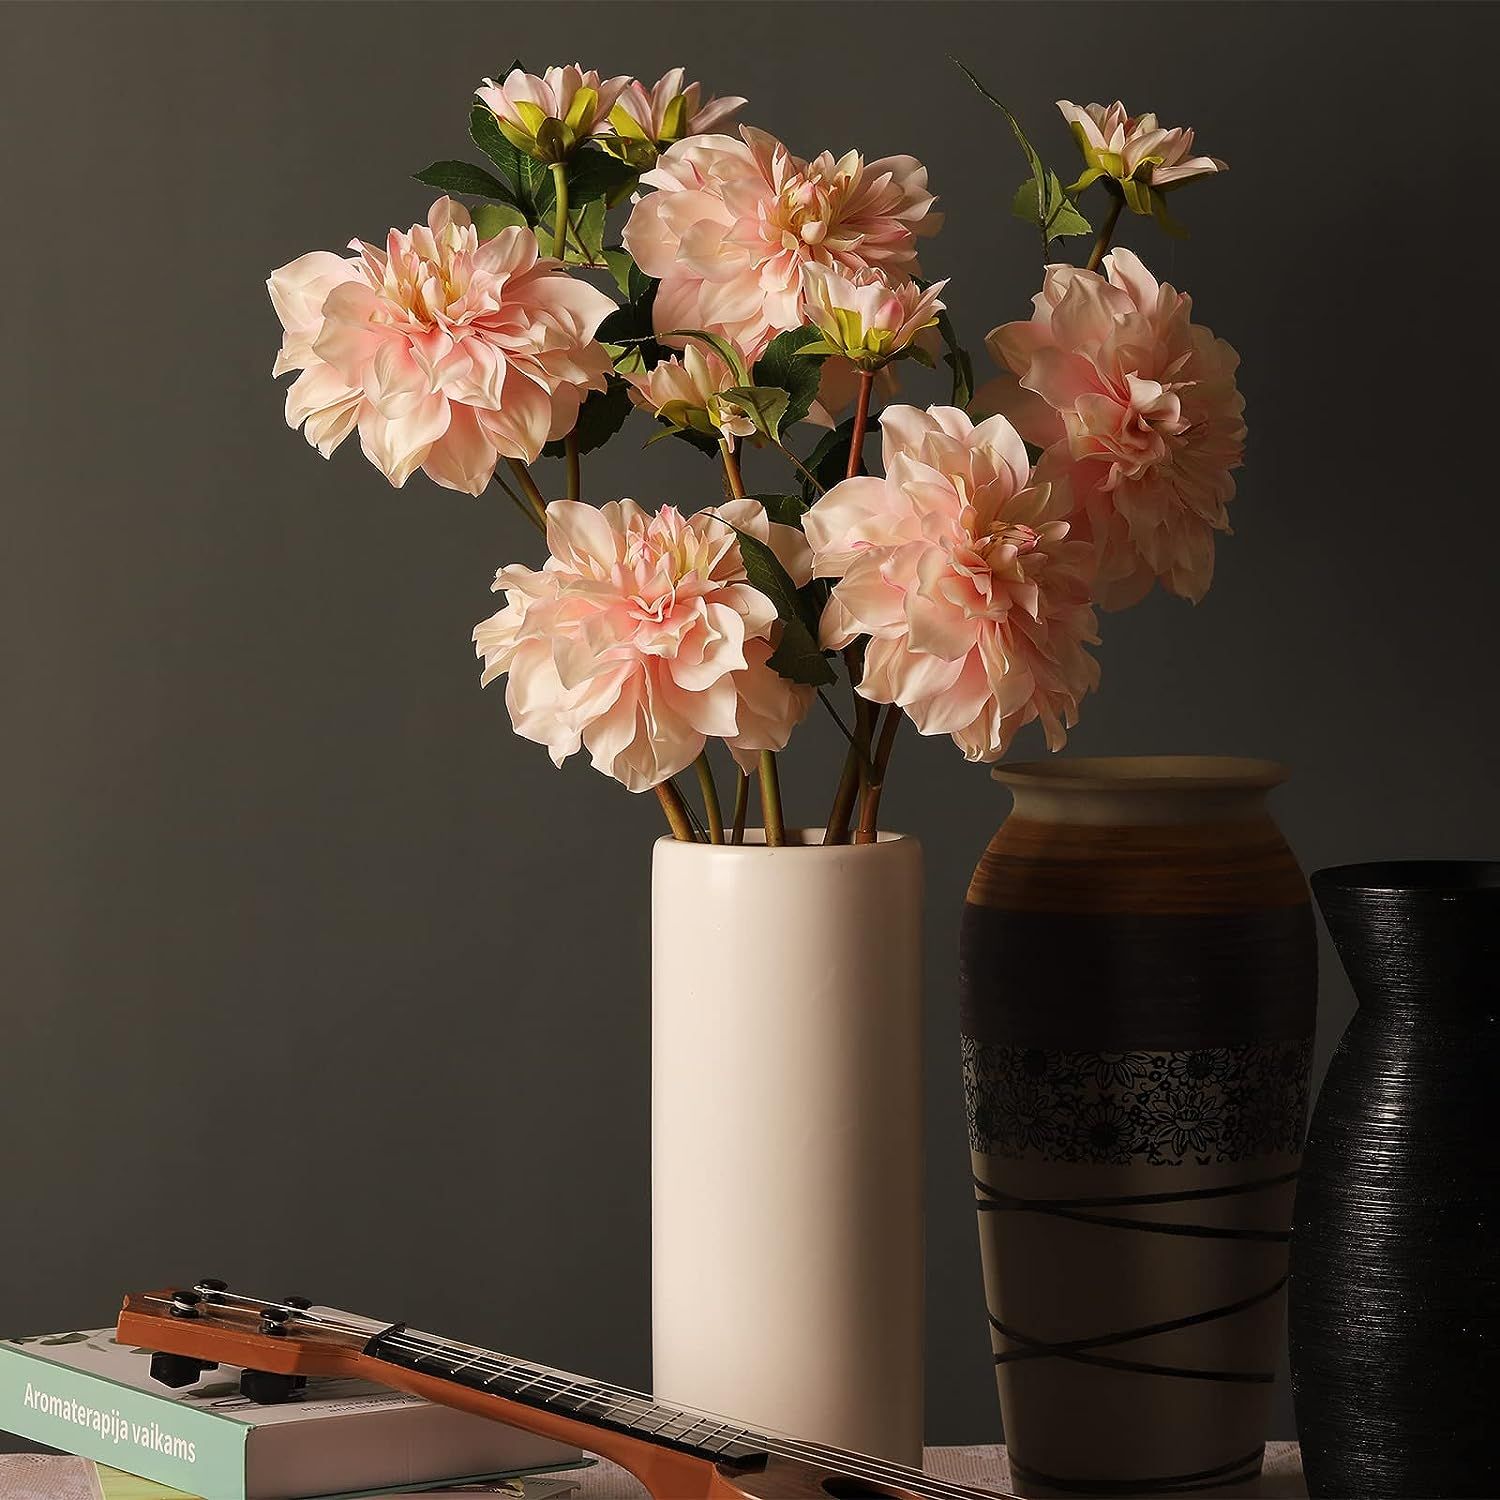 GLSATEMAN Artificial Silk Flowers Dahlia 24'in Long Stem Flower 5 Pcs,Suitable for Wedding Decora... | Amazon (US)